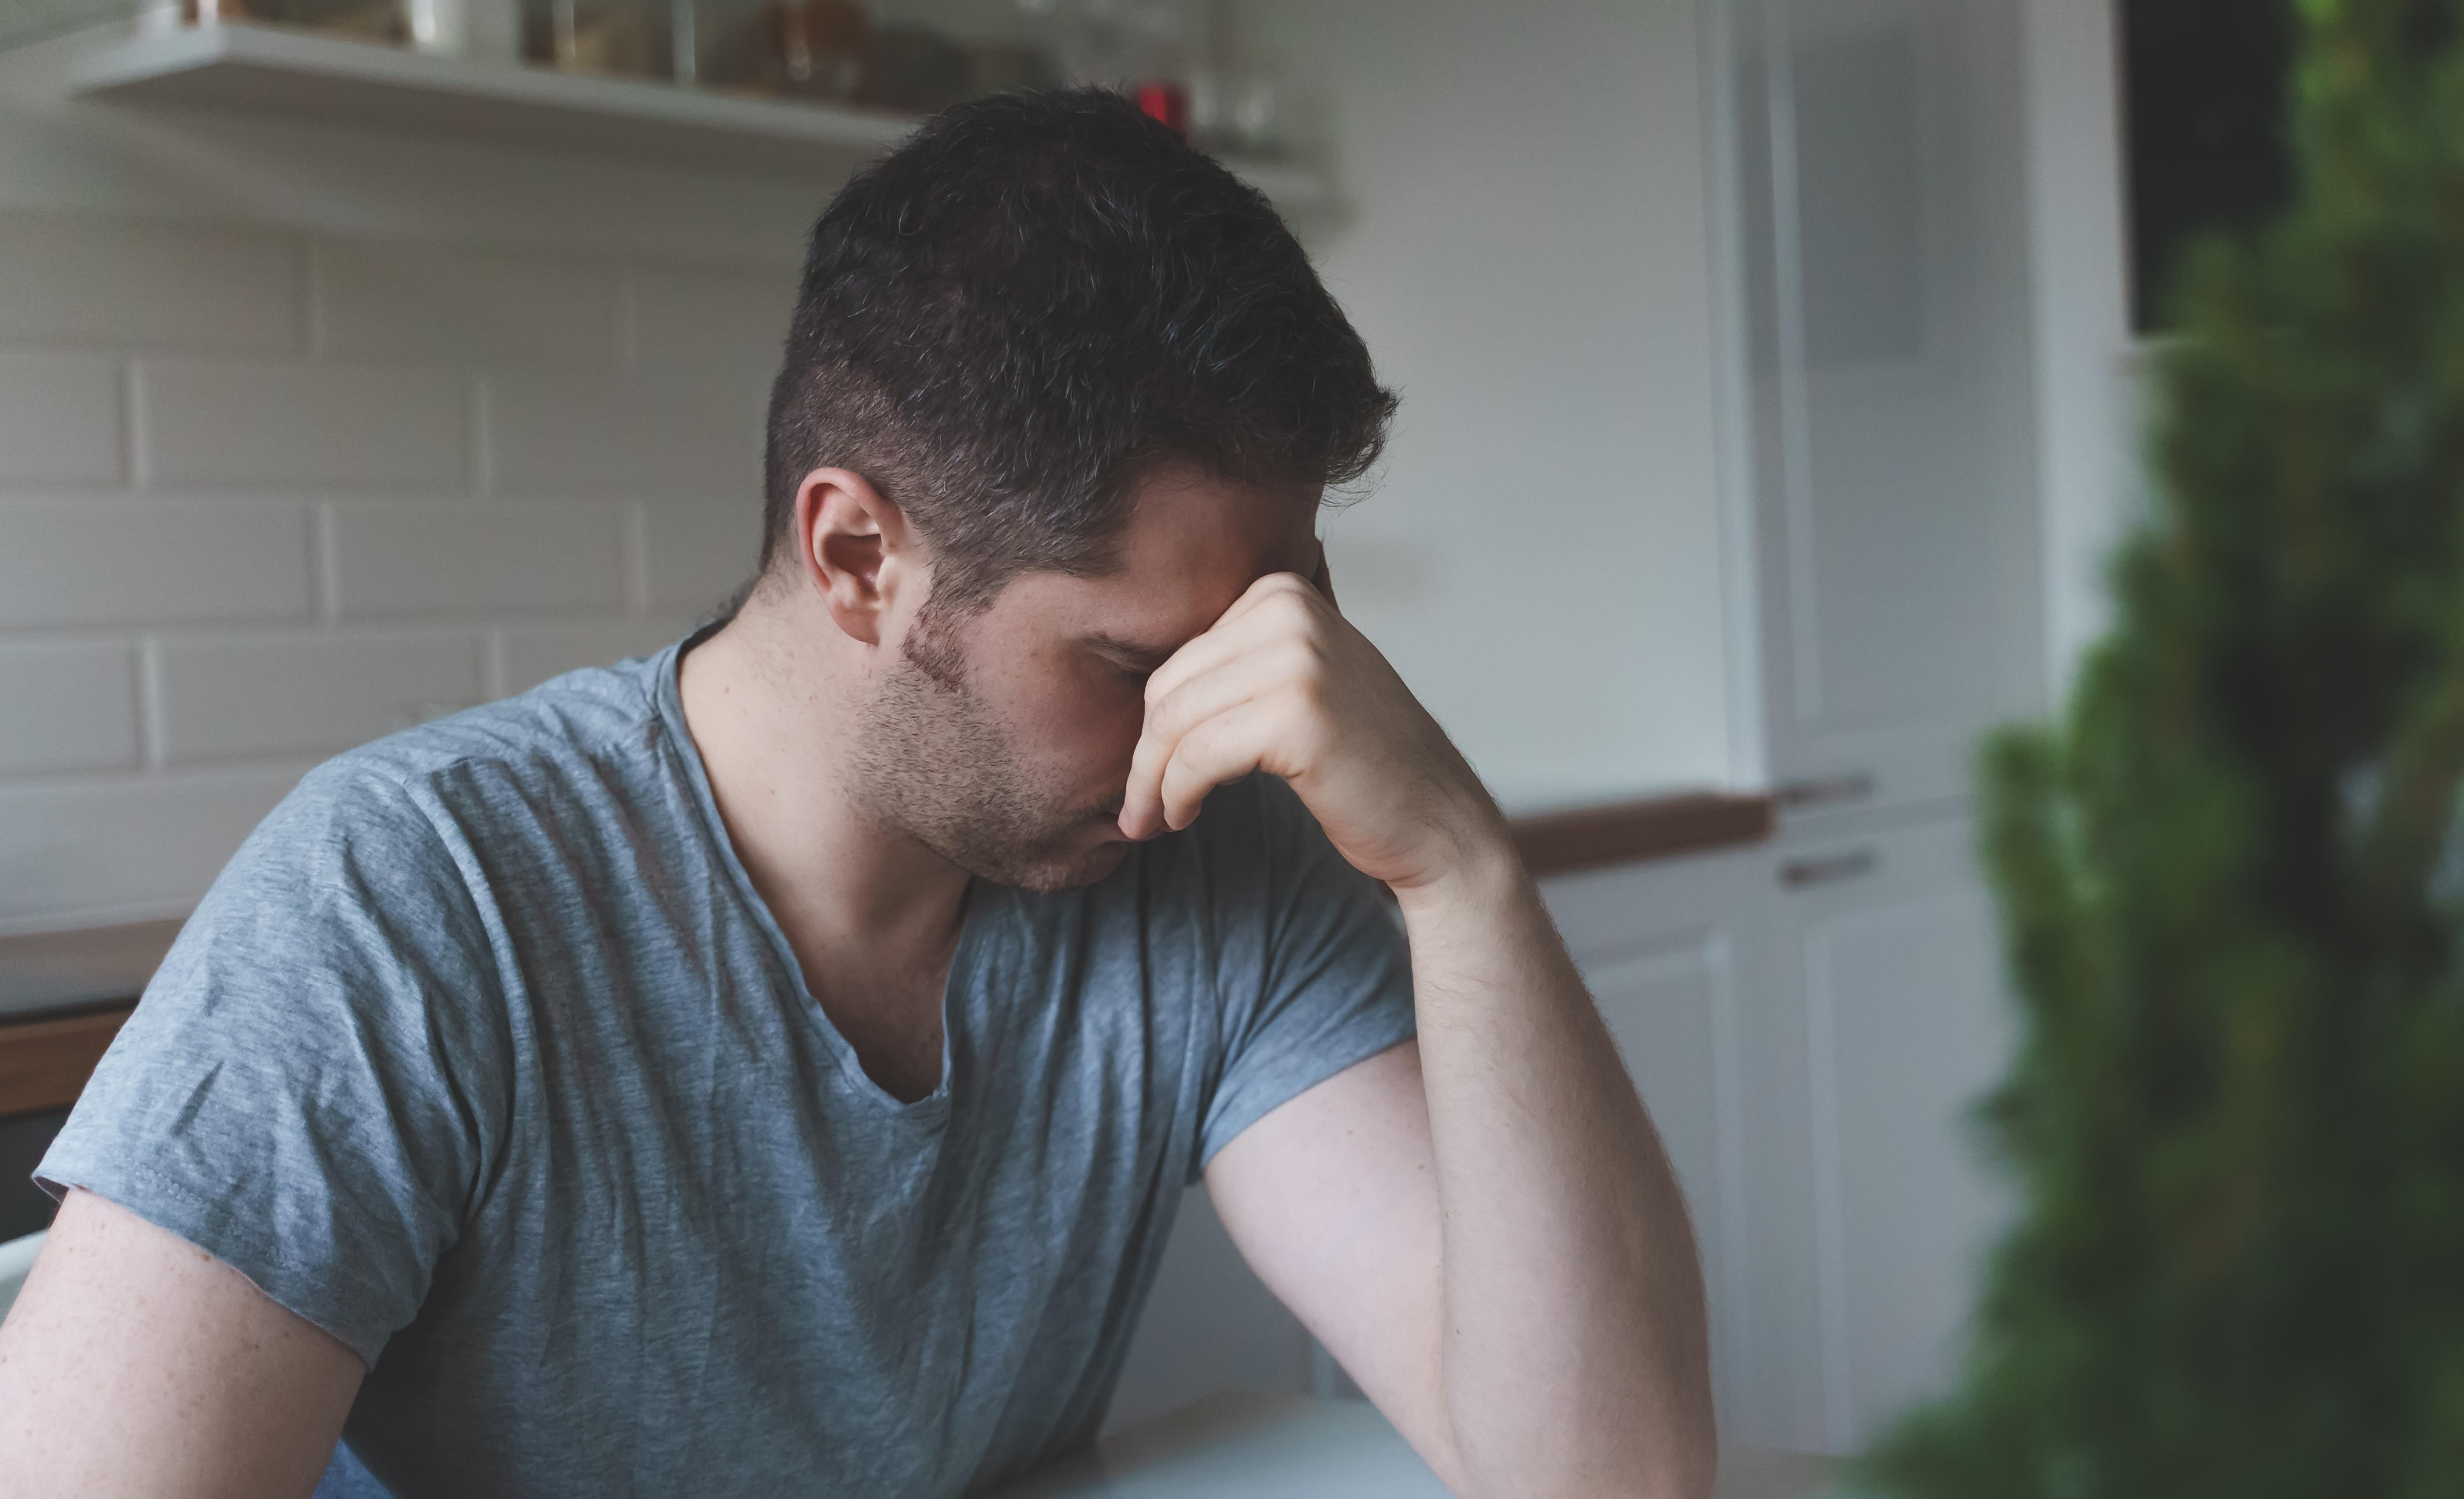 An upset man sitting in the kitchen | Source: Shutterstock